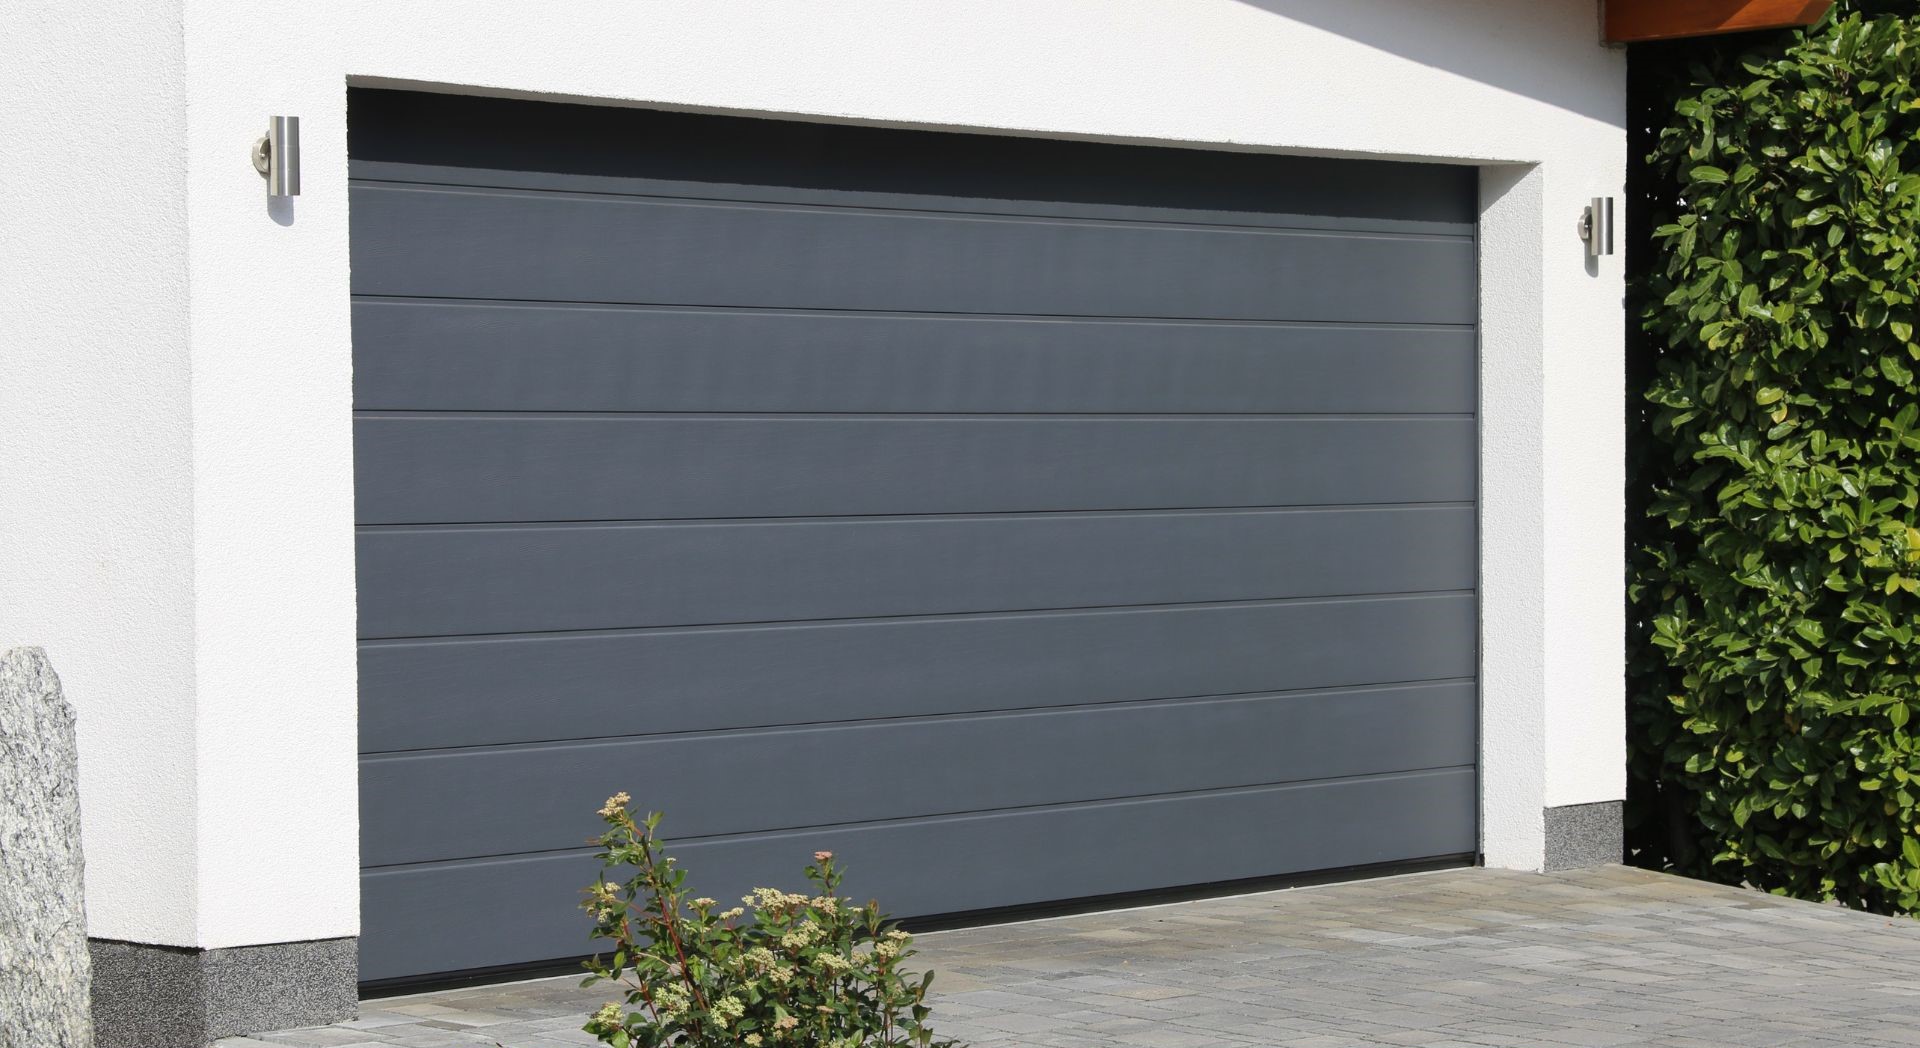 5 Considerations to Replace Garage Door Panels